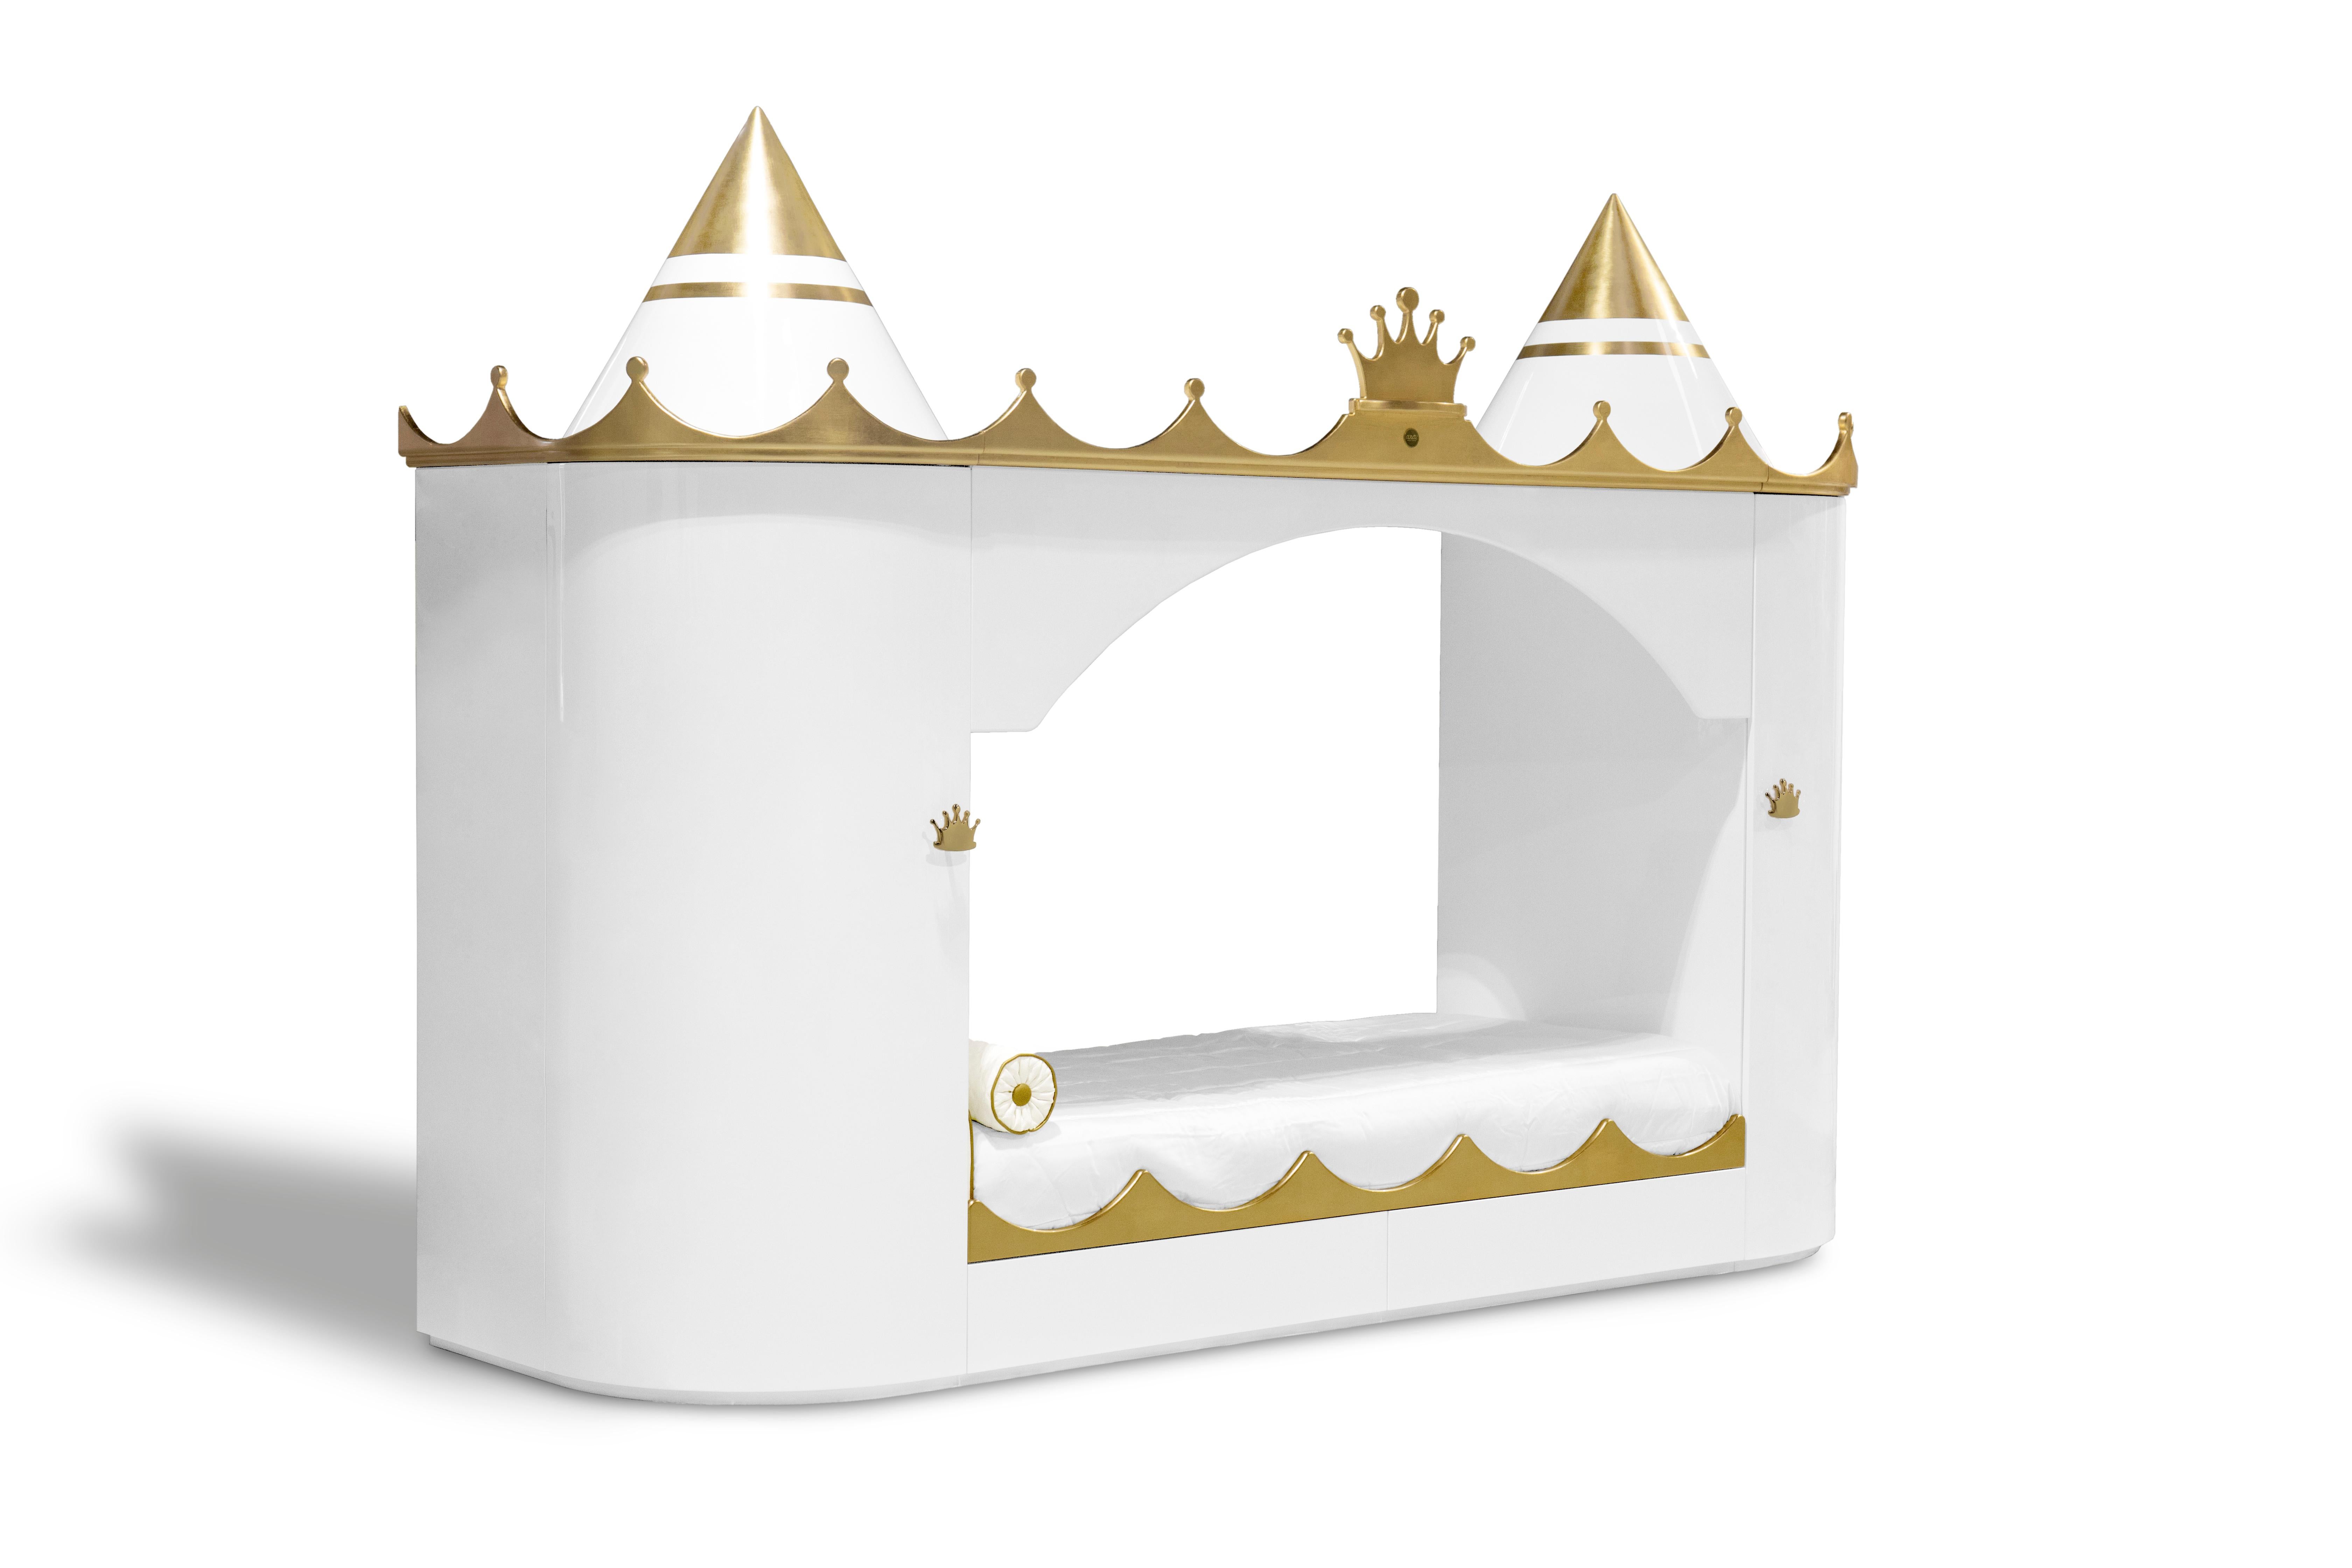 queen size castle bed